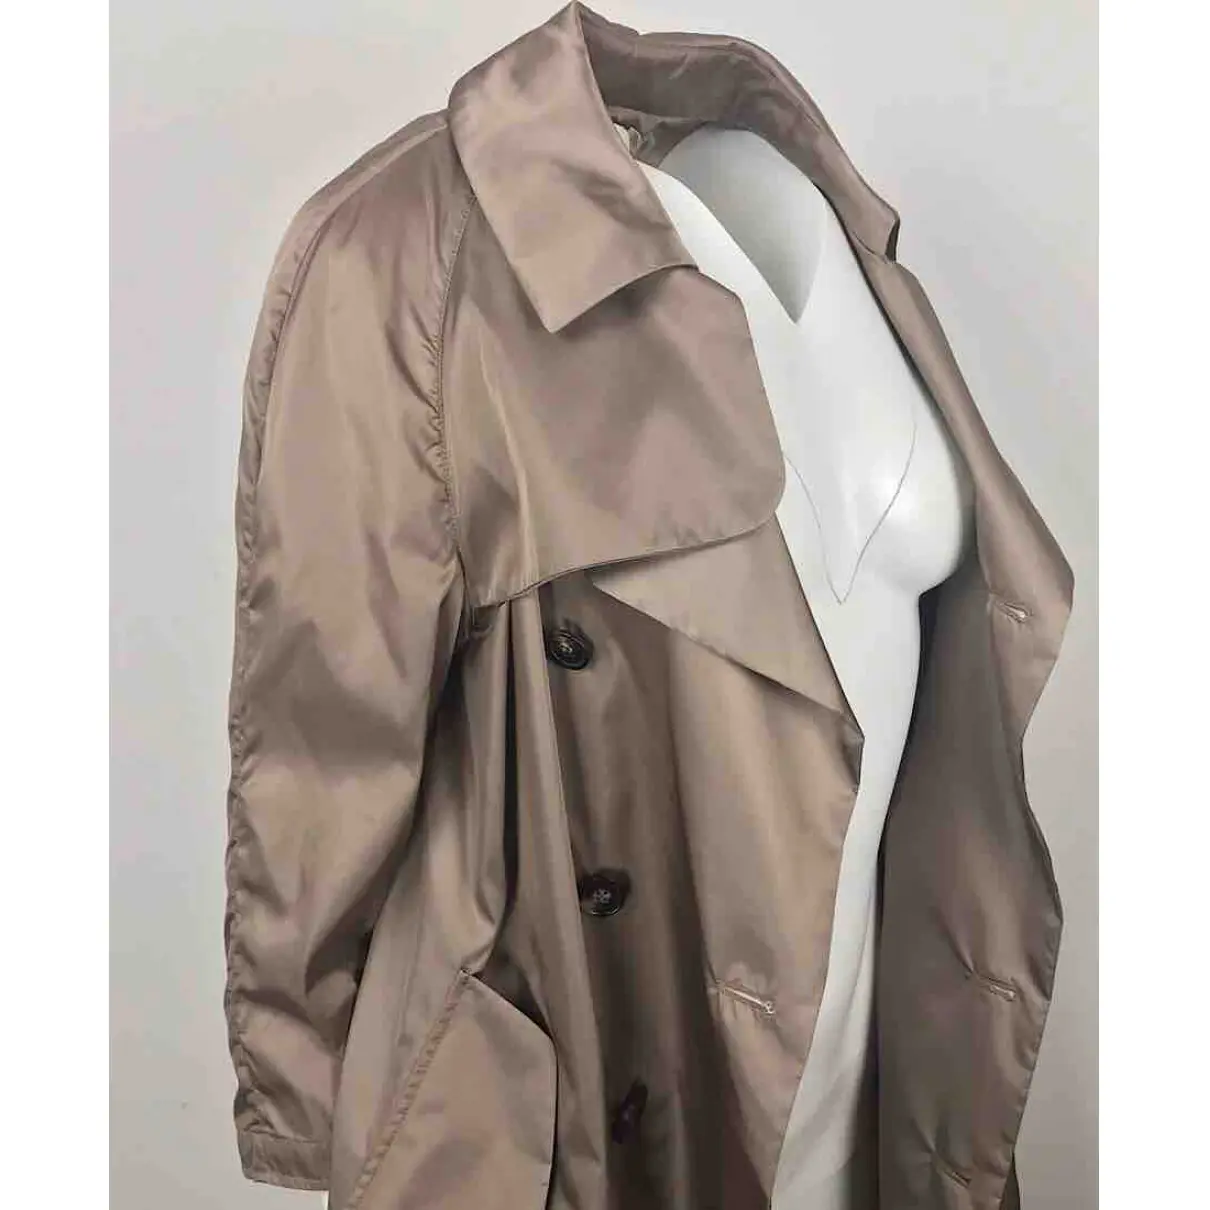 Buy Marni Trench coat online